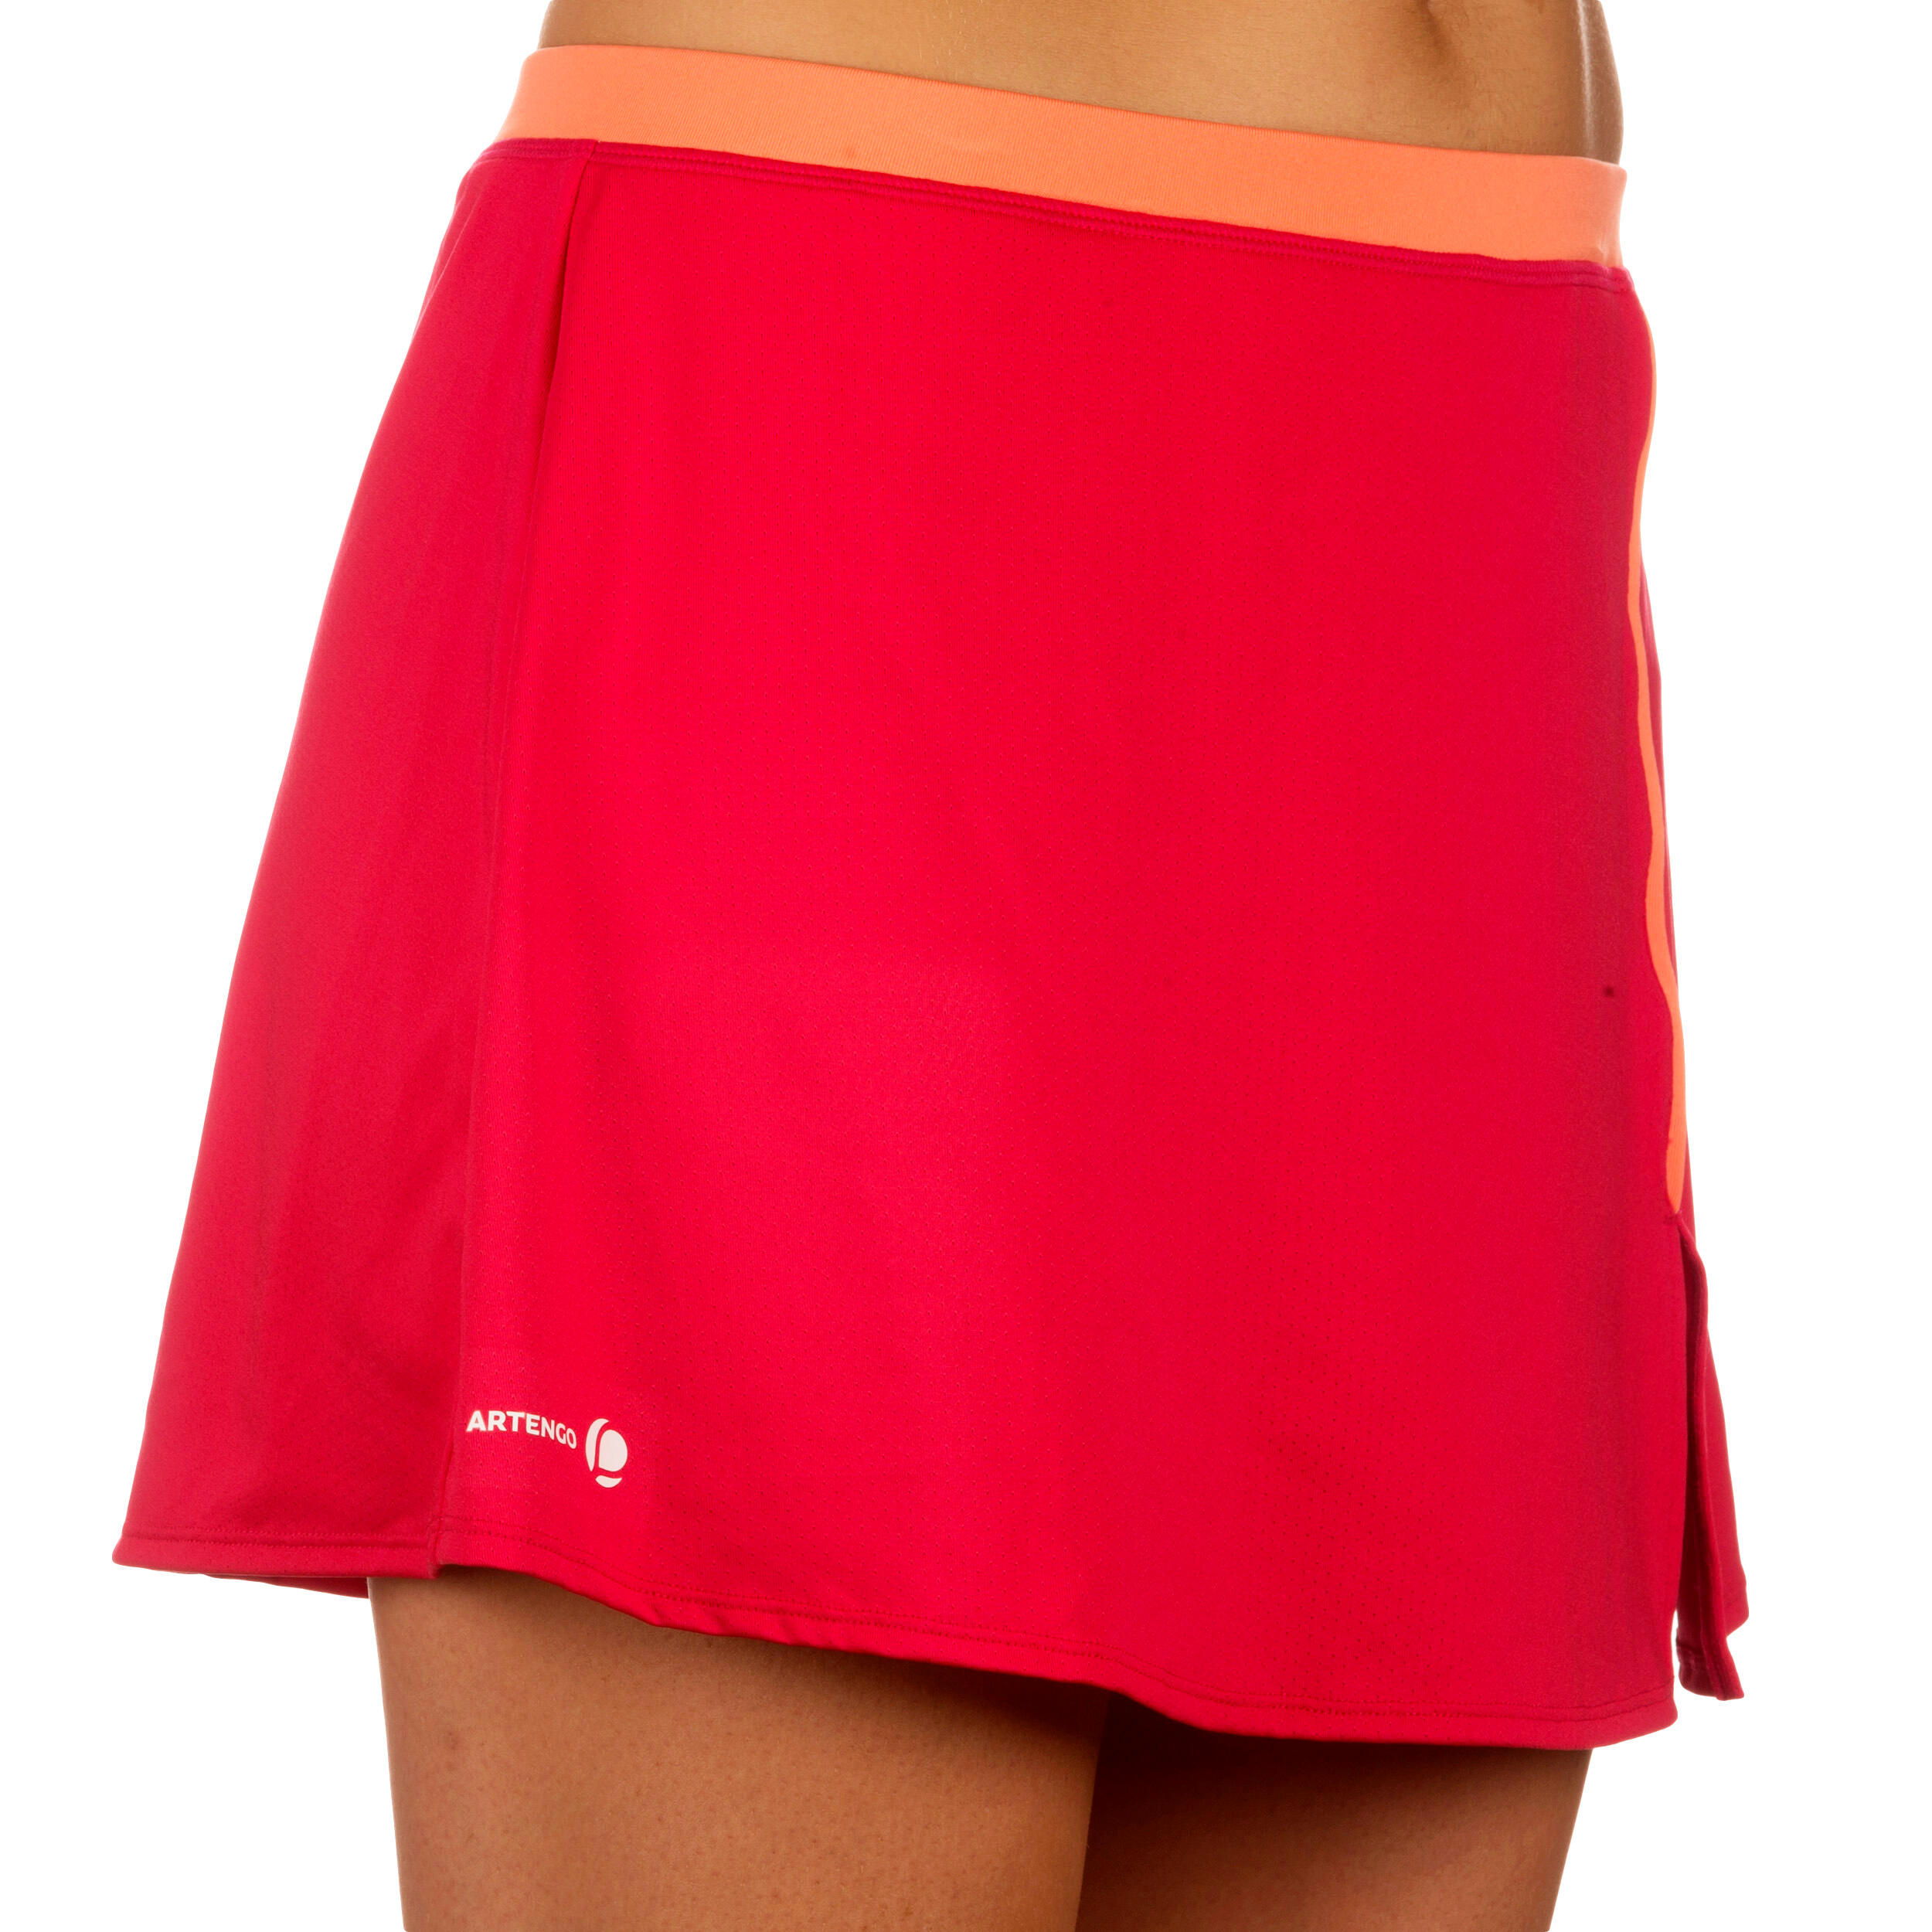 Soft Women's Tennis Badminton Table Tennis Squash Padel Skirt - Pink/Orange 2/6